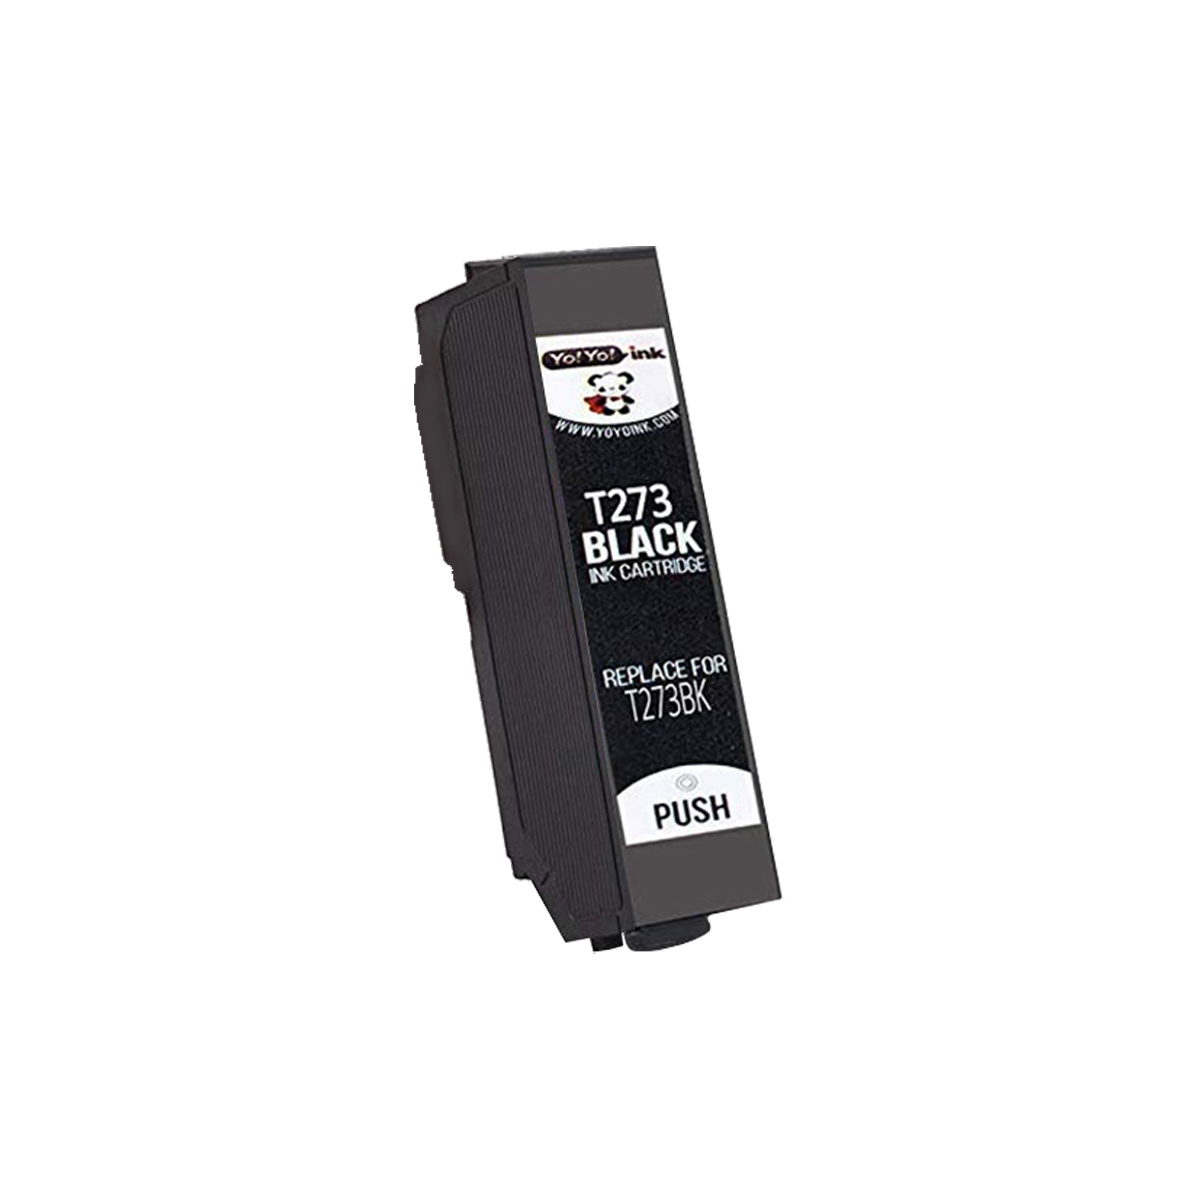 Epson T273 XL High Yield Black Remanufactured Printer Ink Cartridge